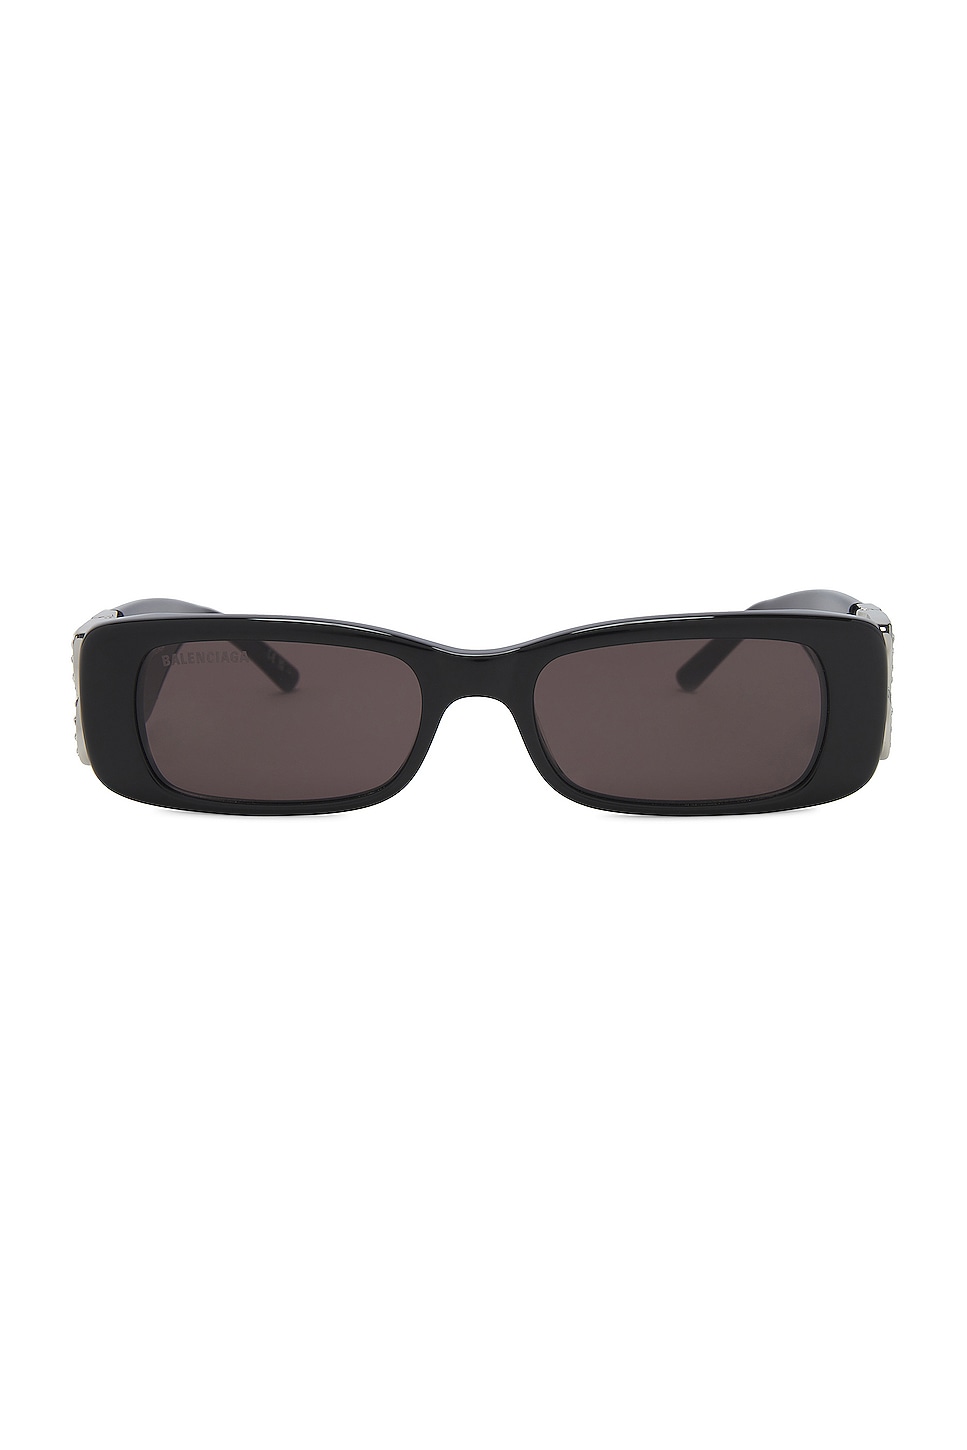 Dynasty Rectangular Sunglasses in Black